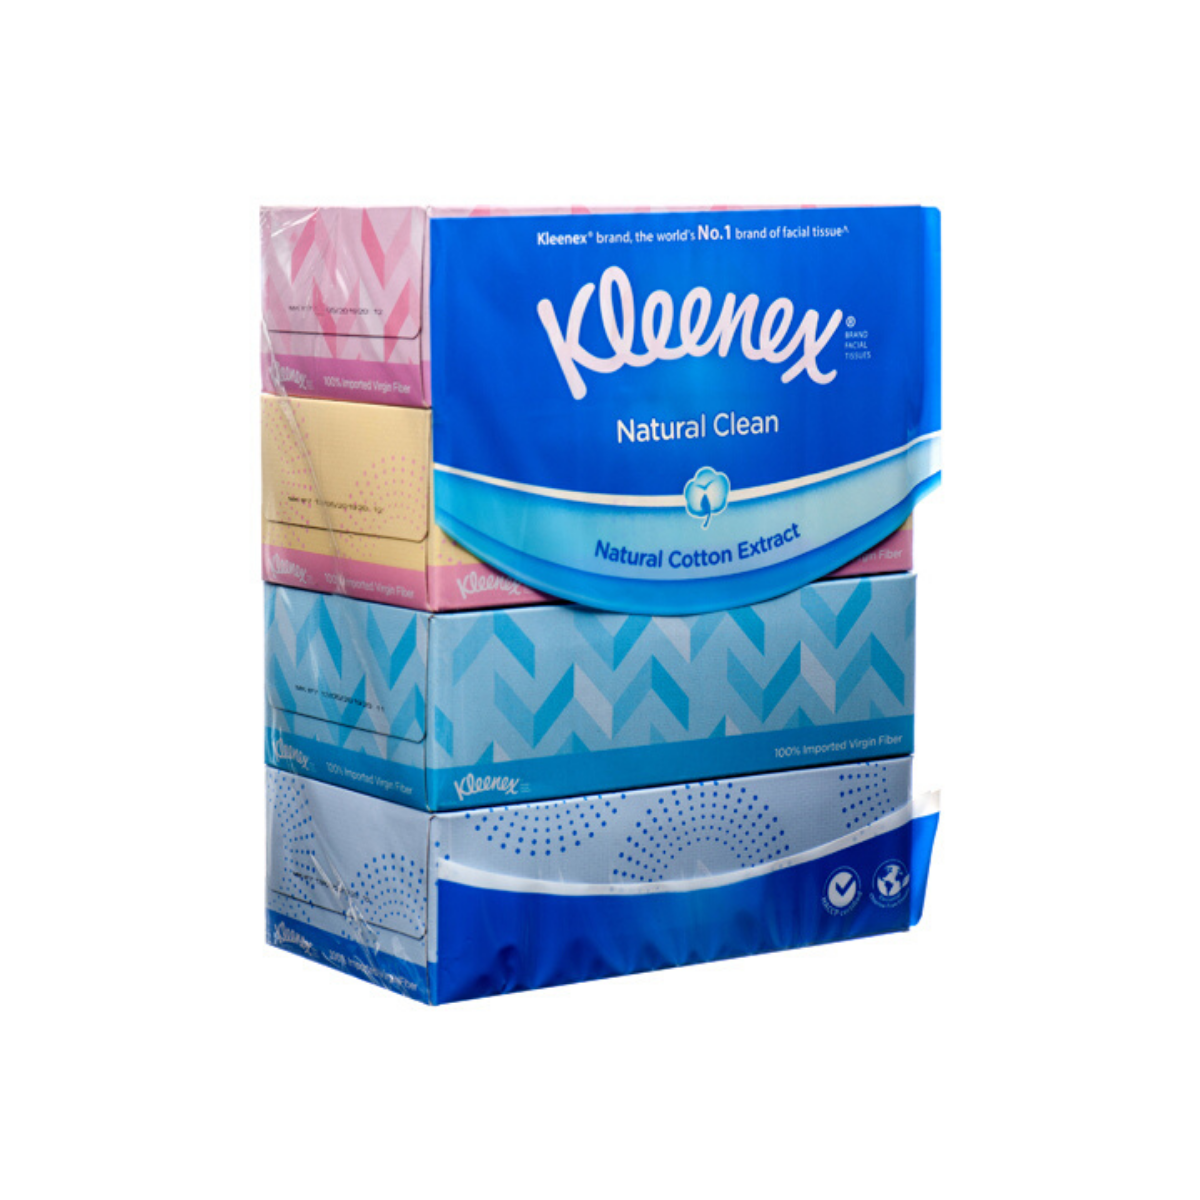 Telman Kleenex Tissue Box 4pack